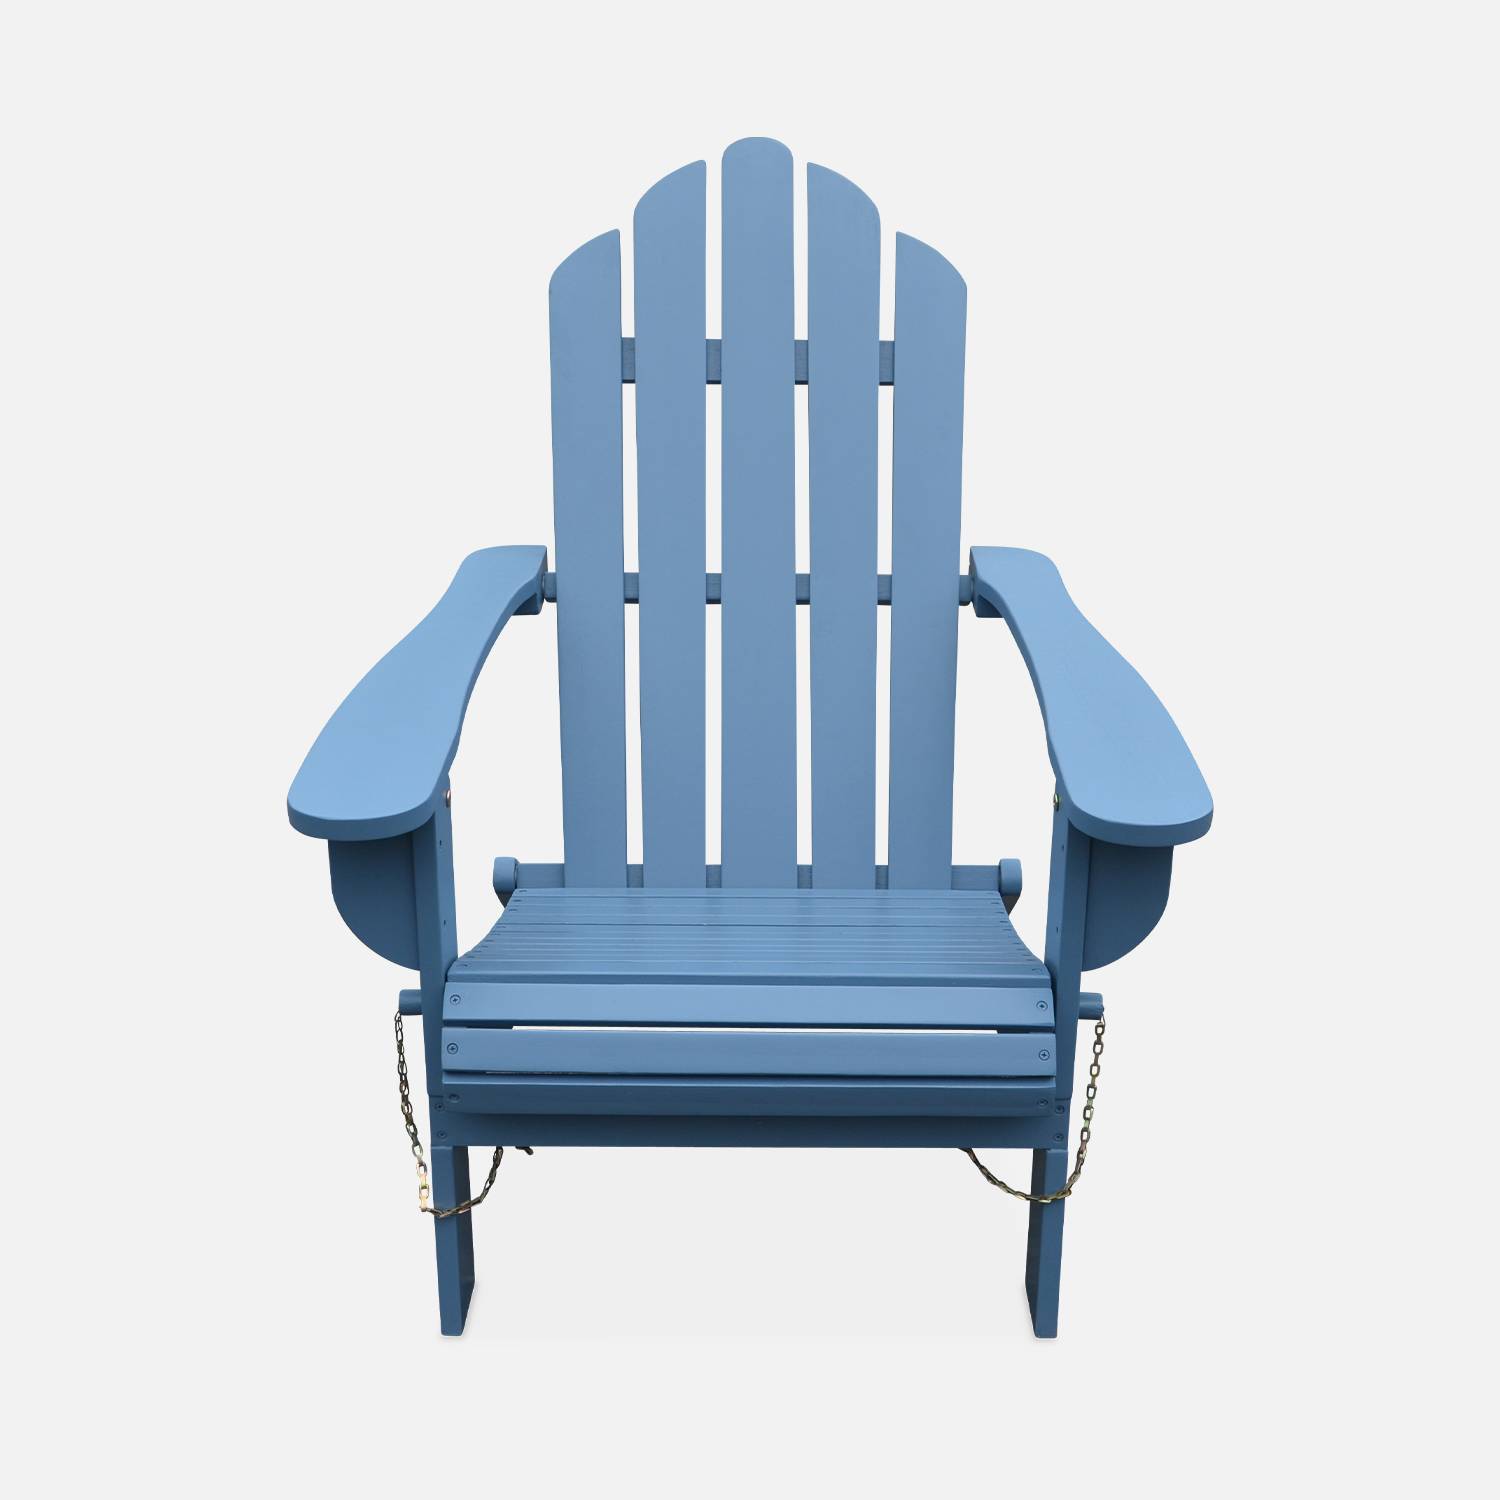 Adirondack Garden Armchair - Foldable, Wooden, Eucalyptus, Retro-style Relax Chair - Grey Blue Photo4